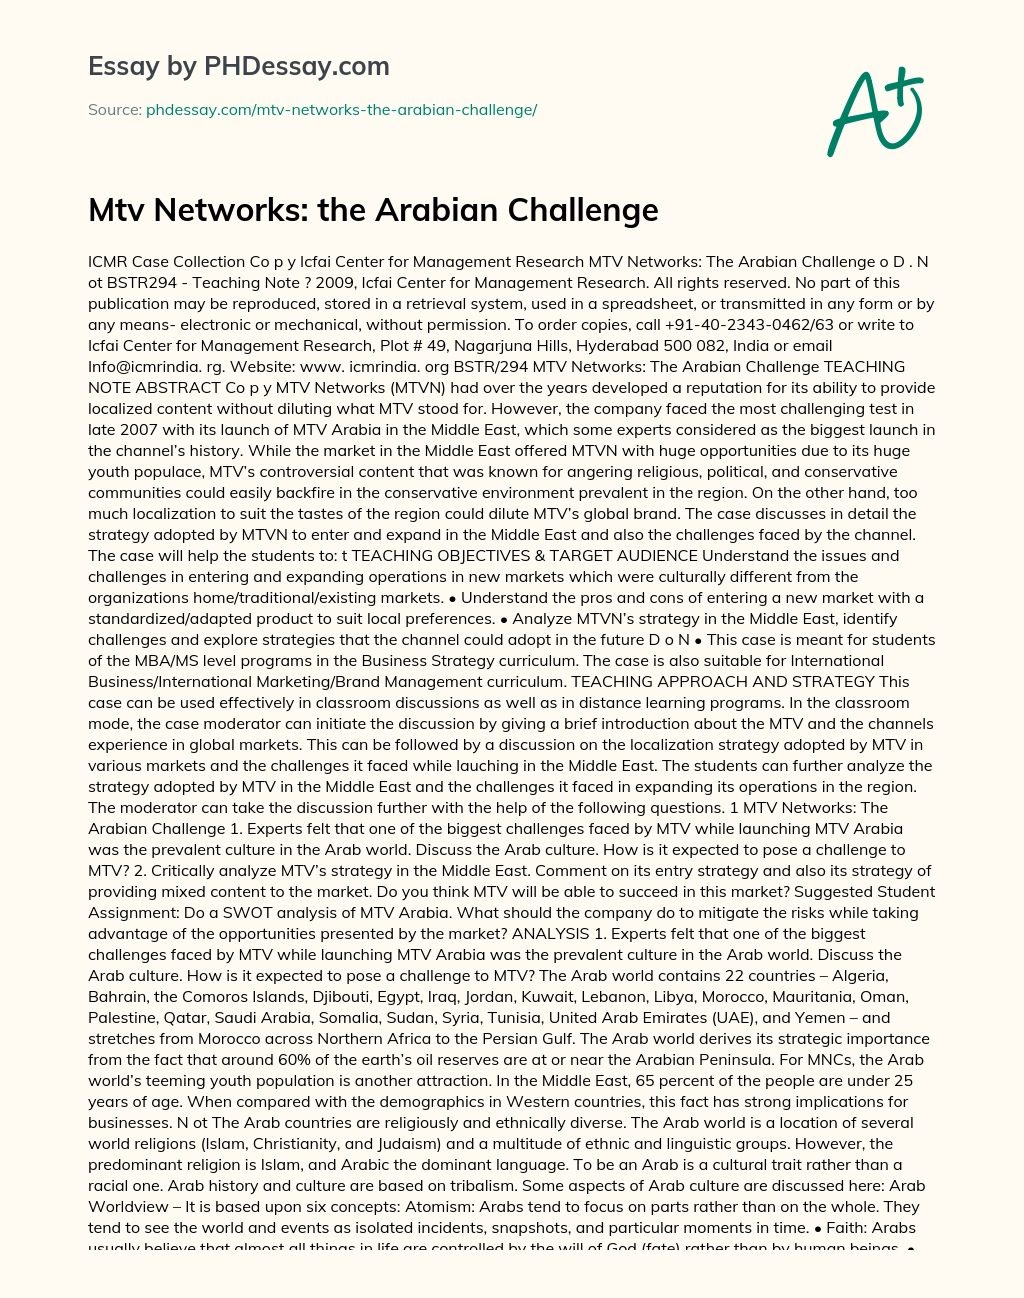 Mtv Networks: the Arabian Challenge essay